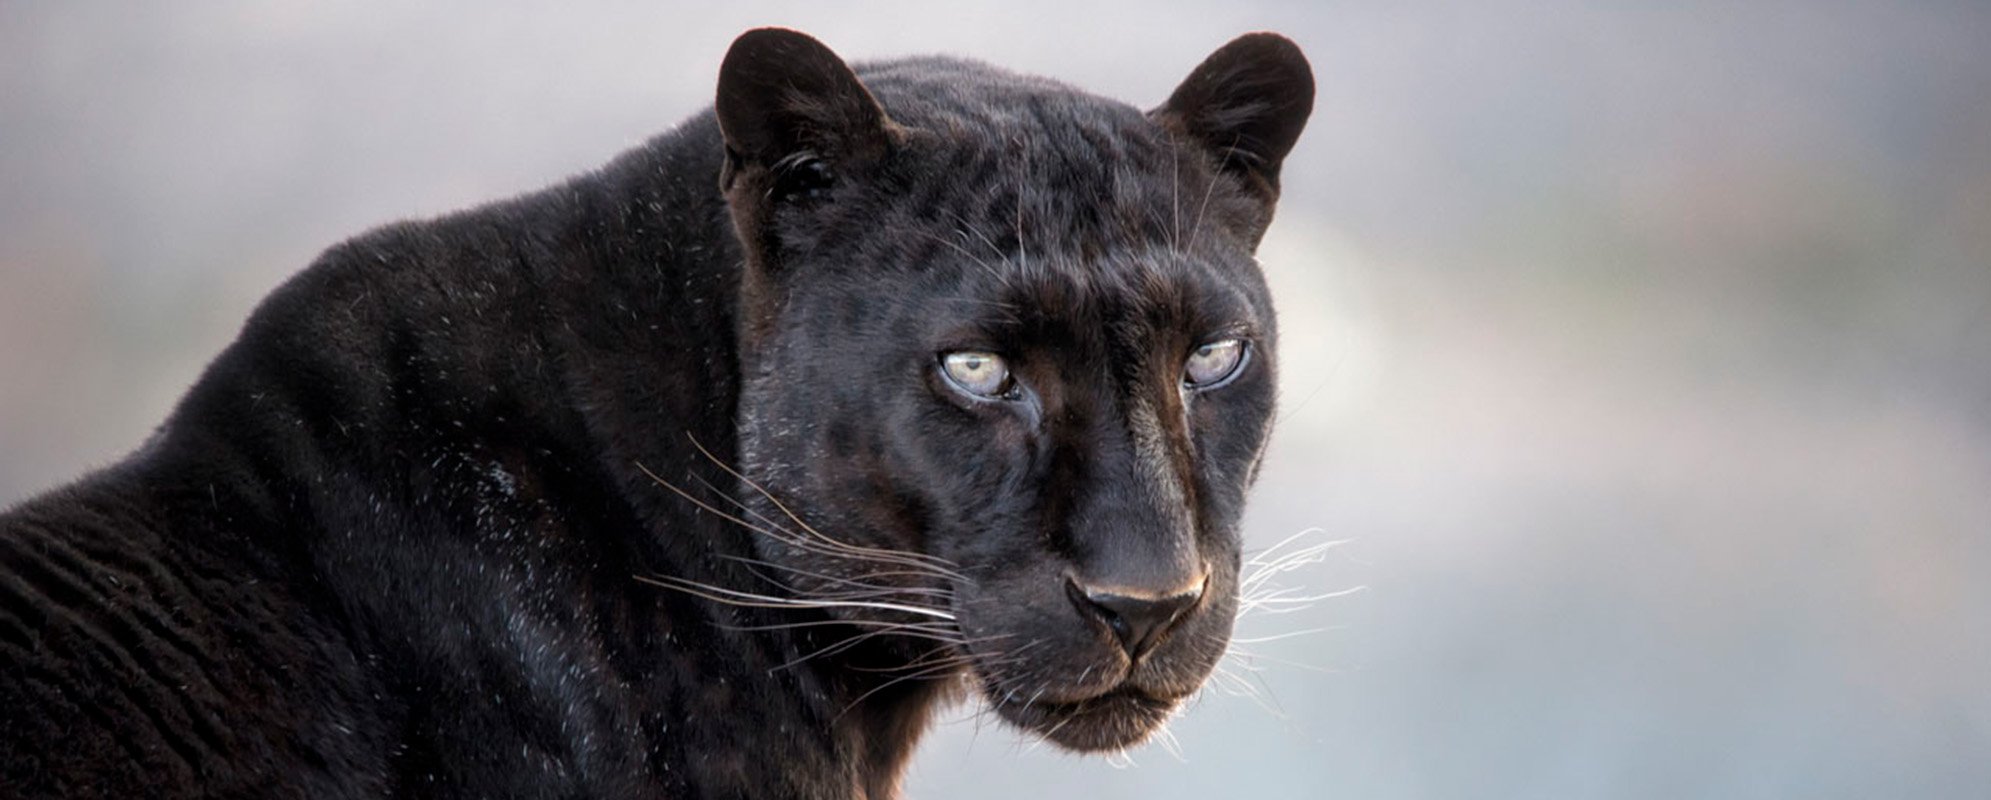 The Black Leopard